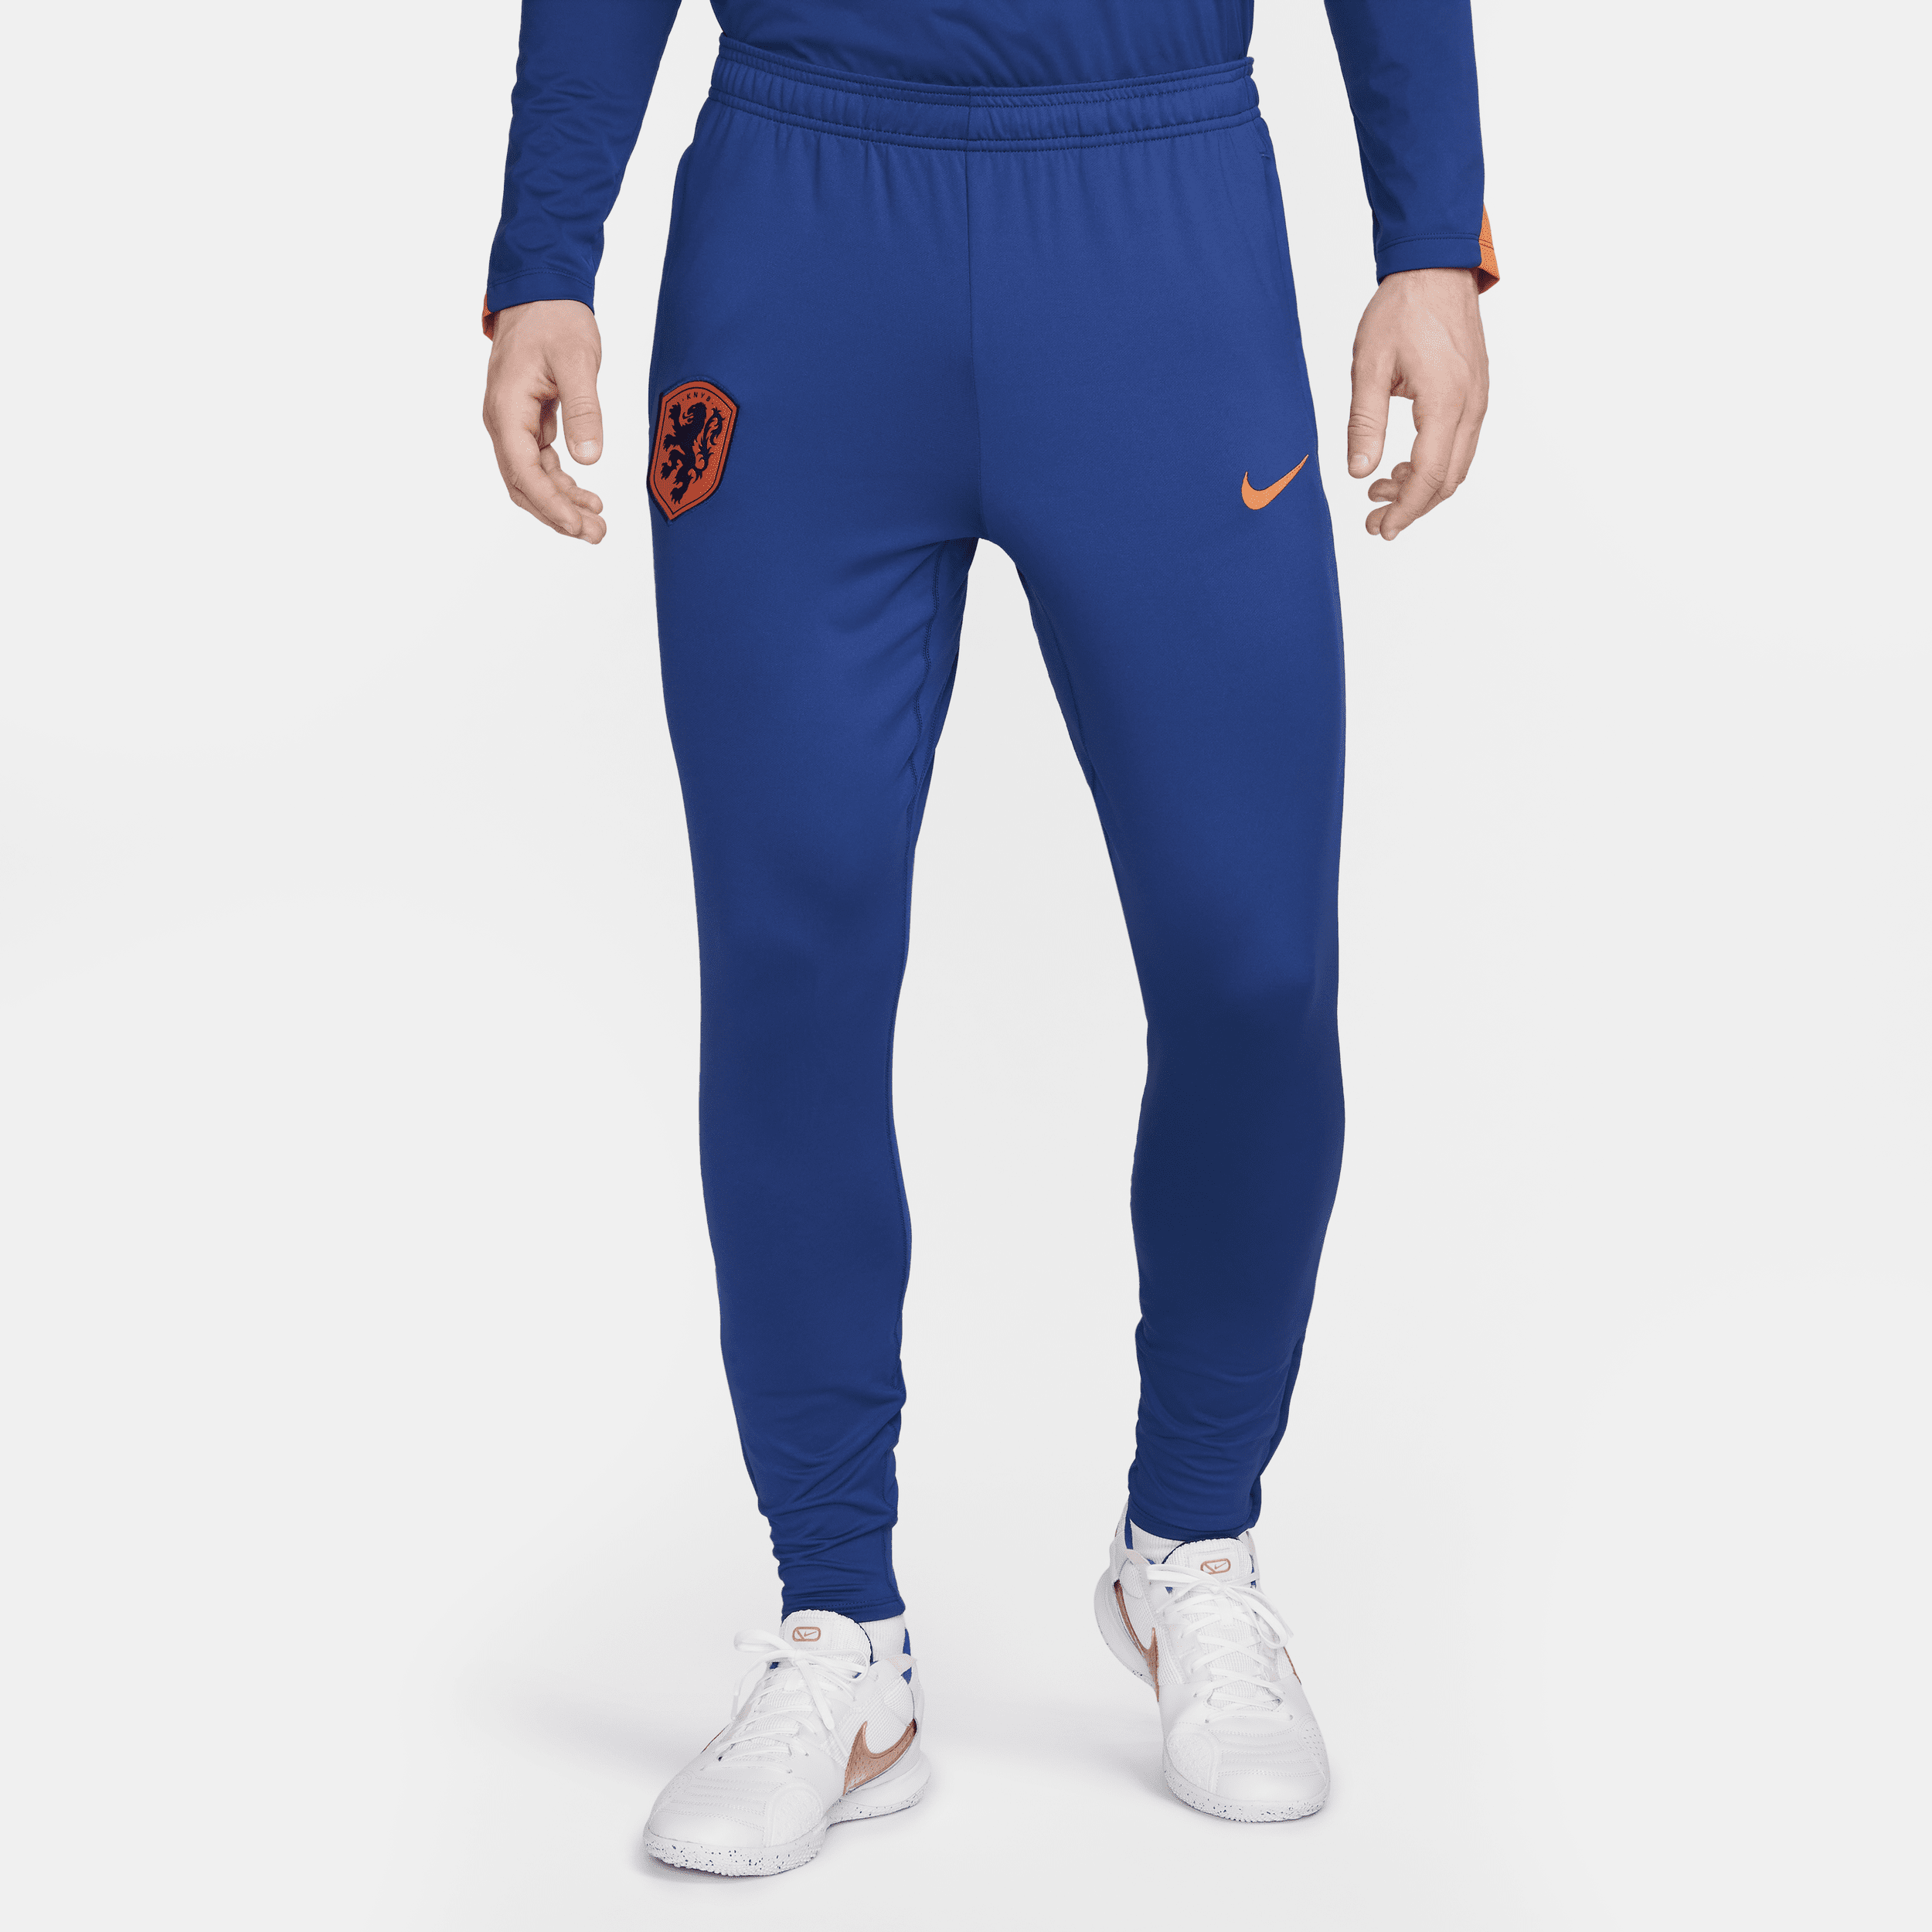 Nederland Strike Nike Dri-FIT knit voetbalbroek voor heren - Blauw